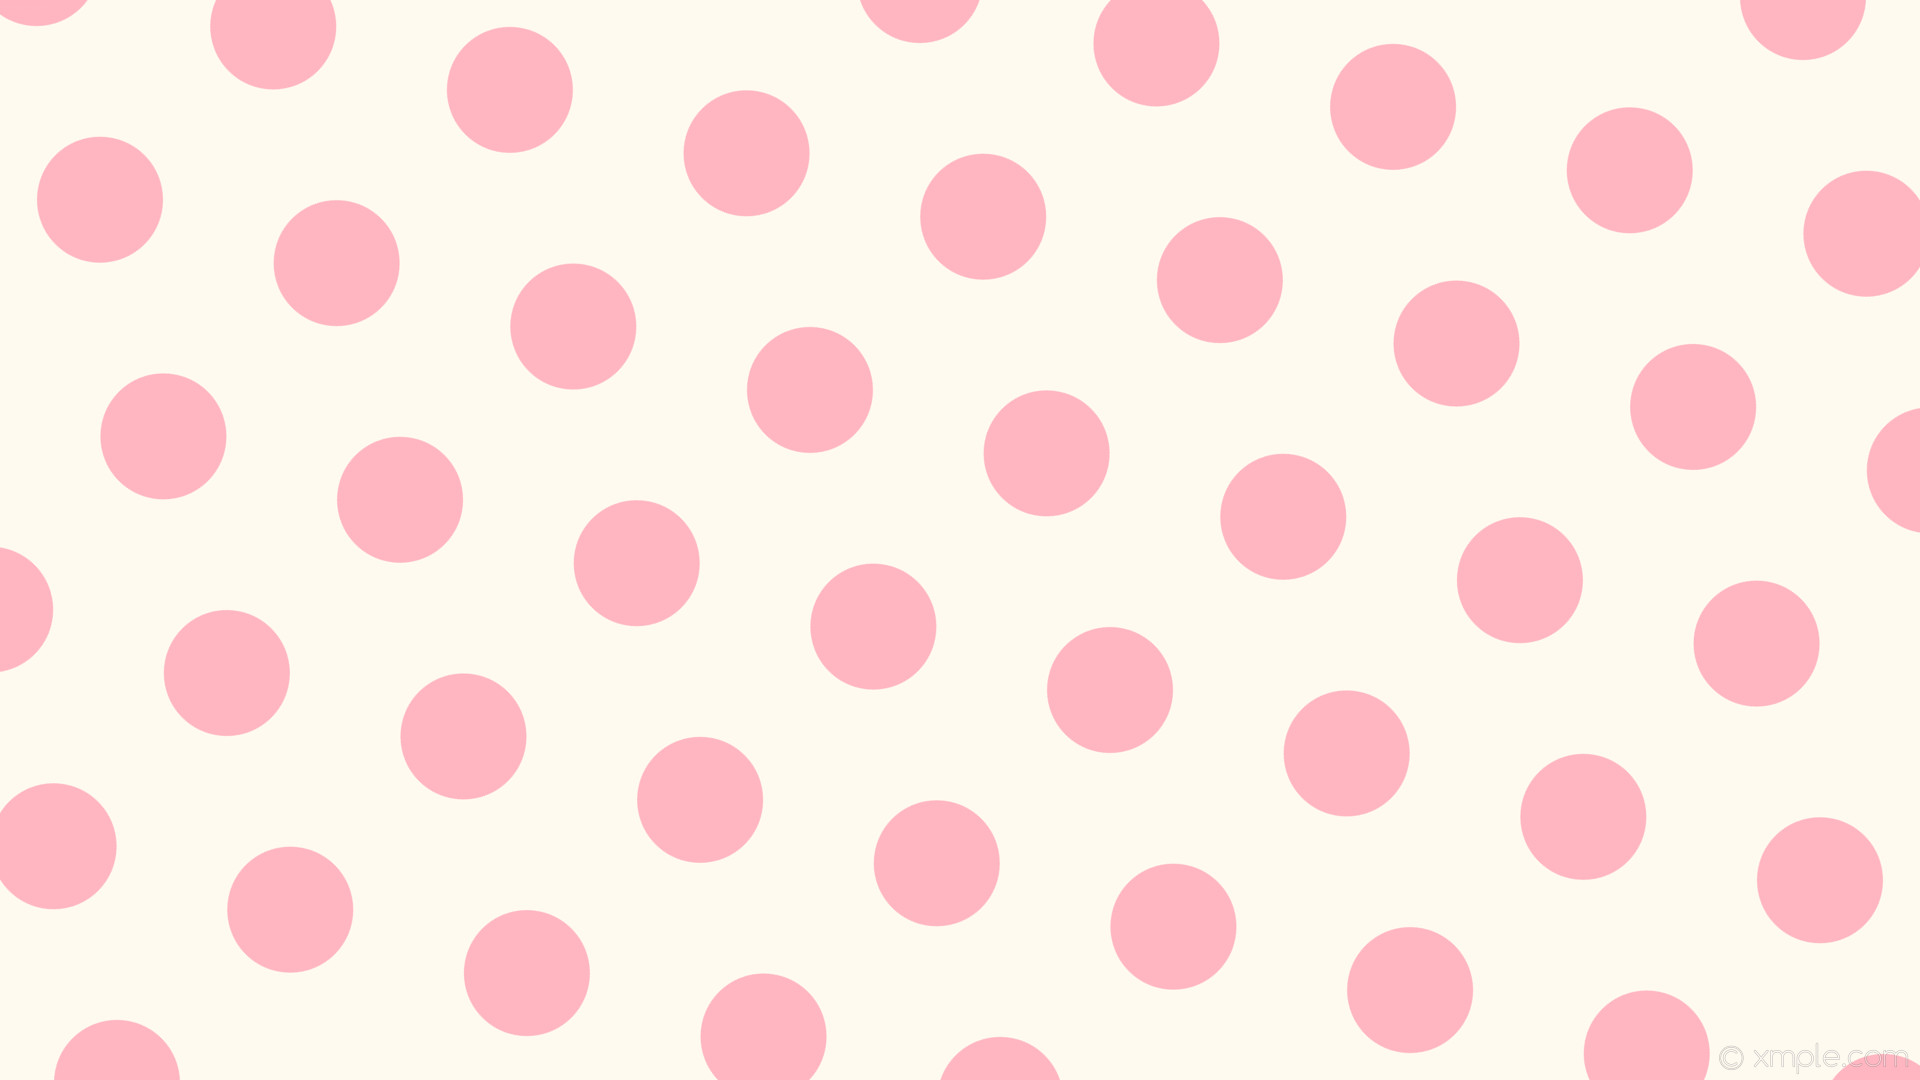 1920x1080 wallpaper polka dots hexagon white pink floral white light pink #fffaf0  #ffb6c1 diagonal 45